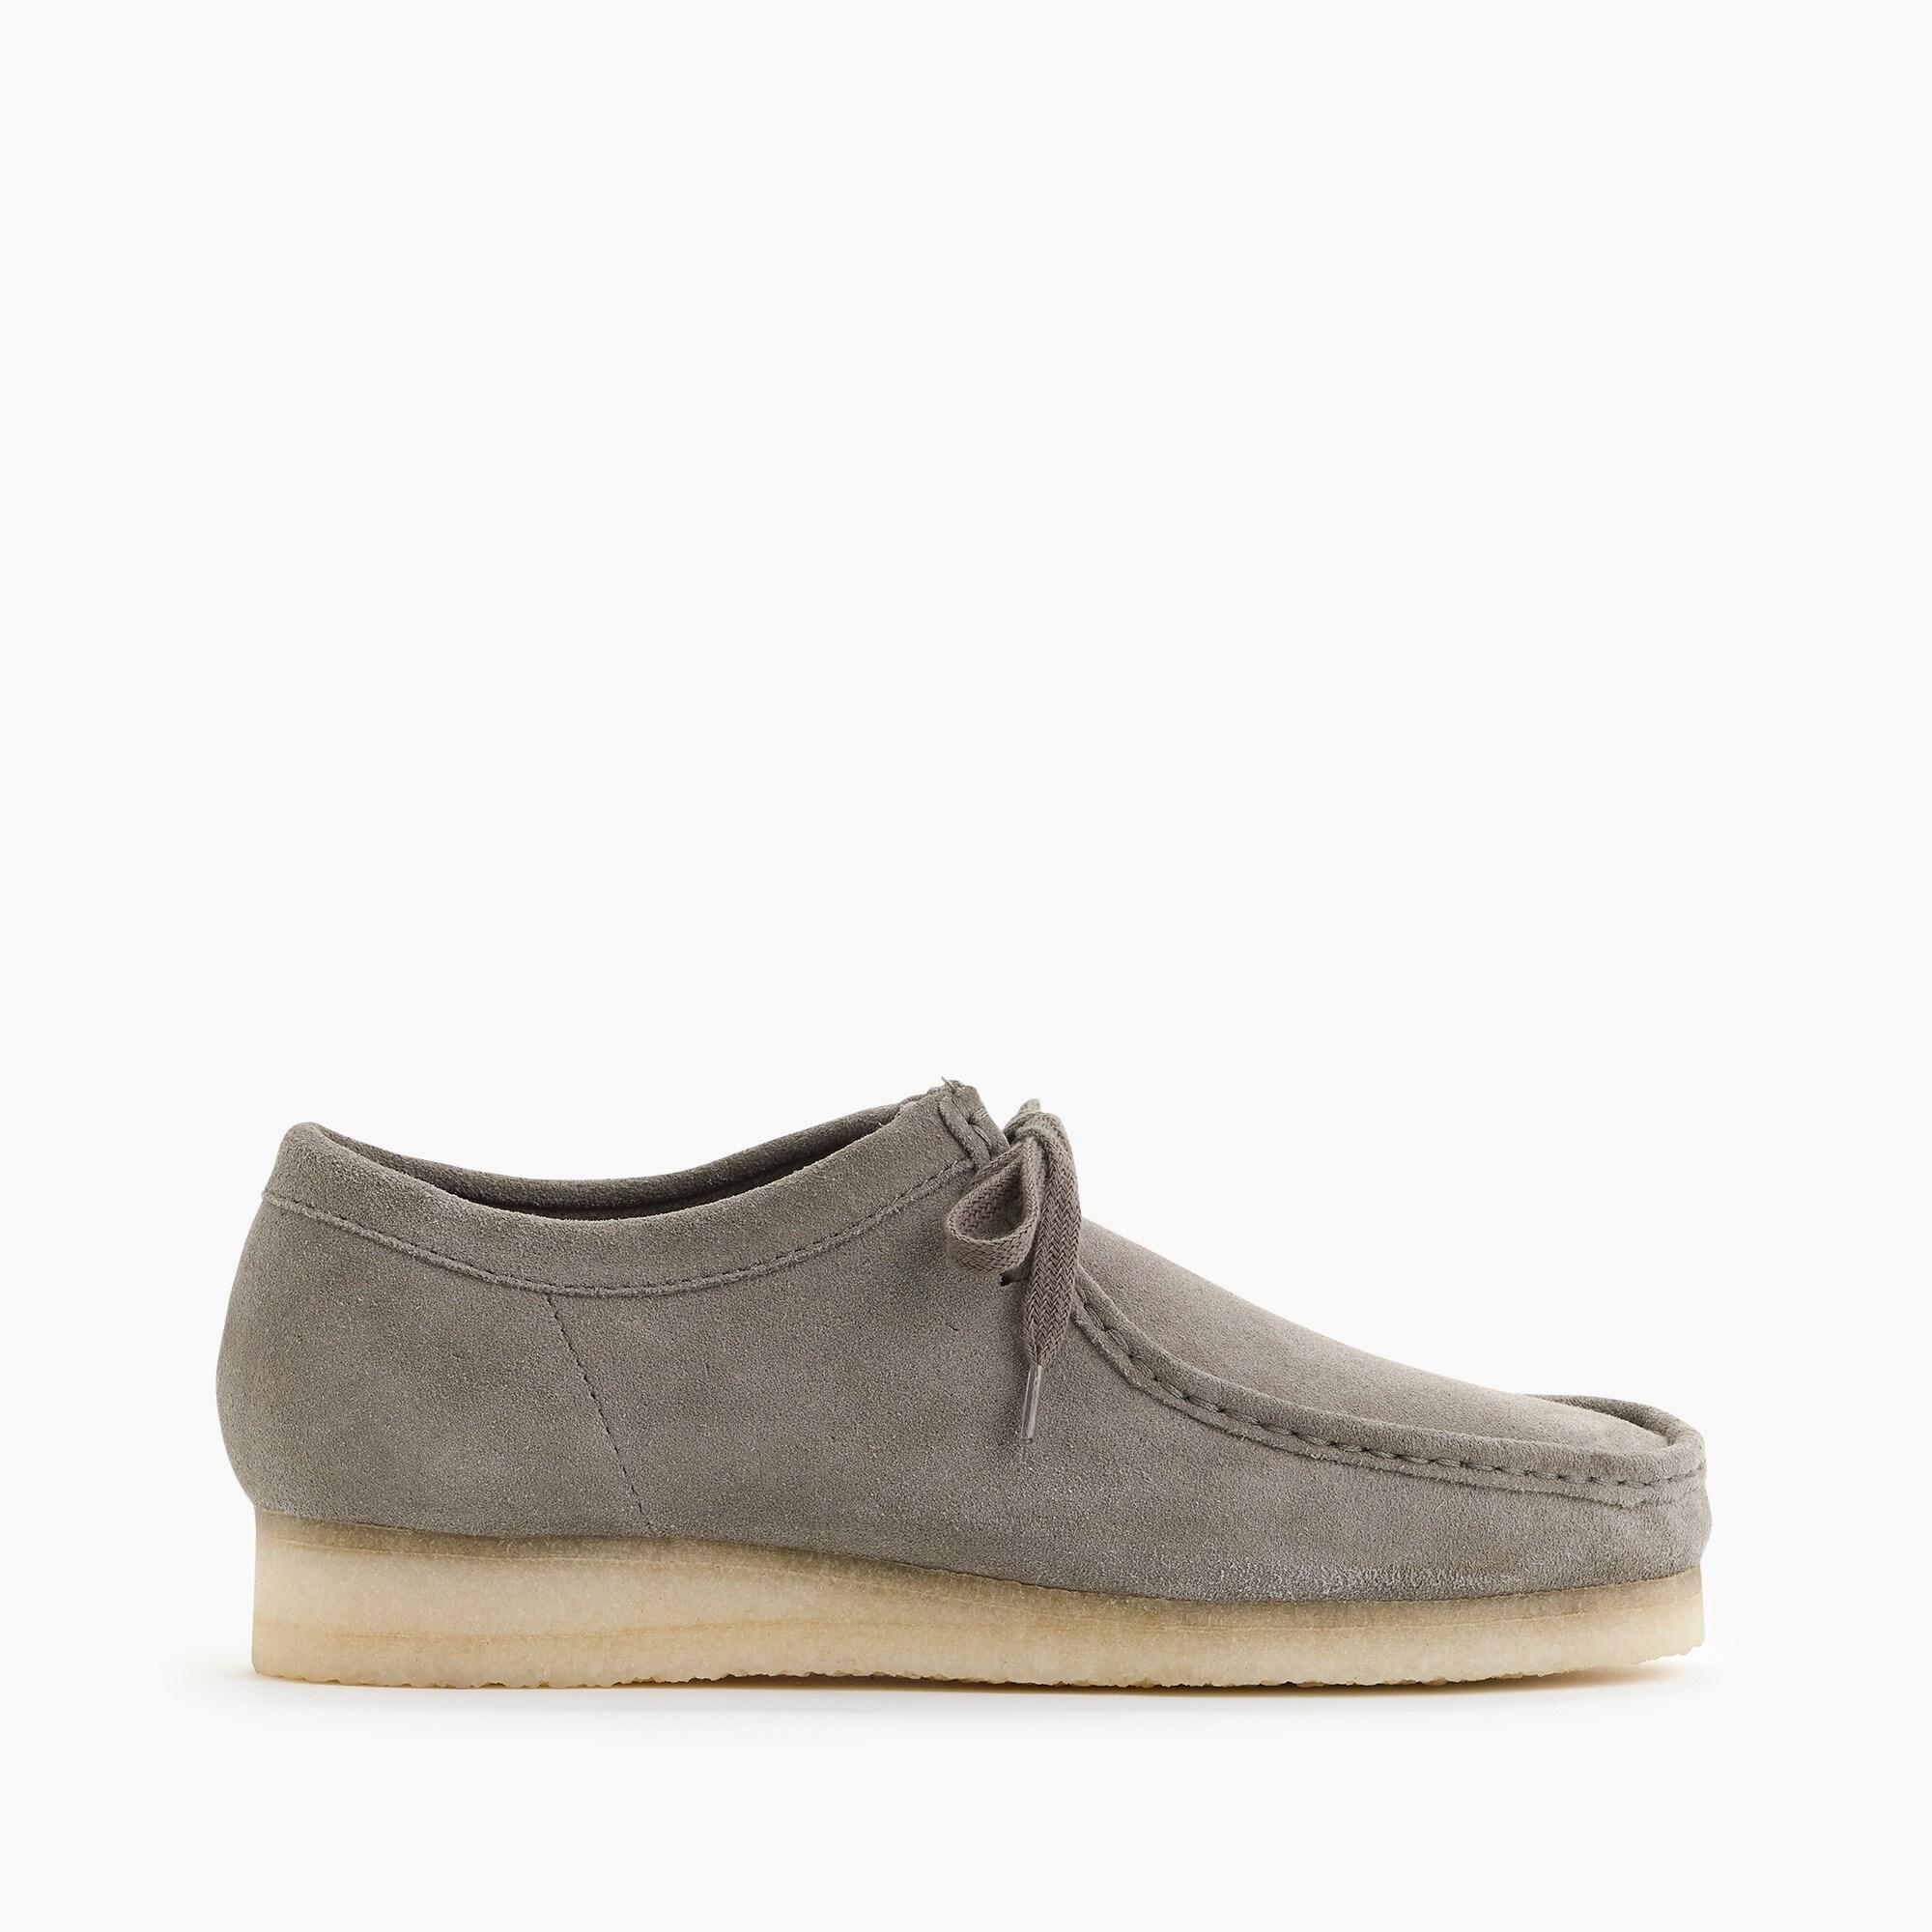 Clarks ® Originals Wallabee® Shoes In Suede in Gray for Men | Lyst